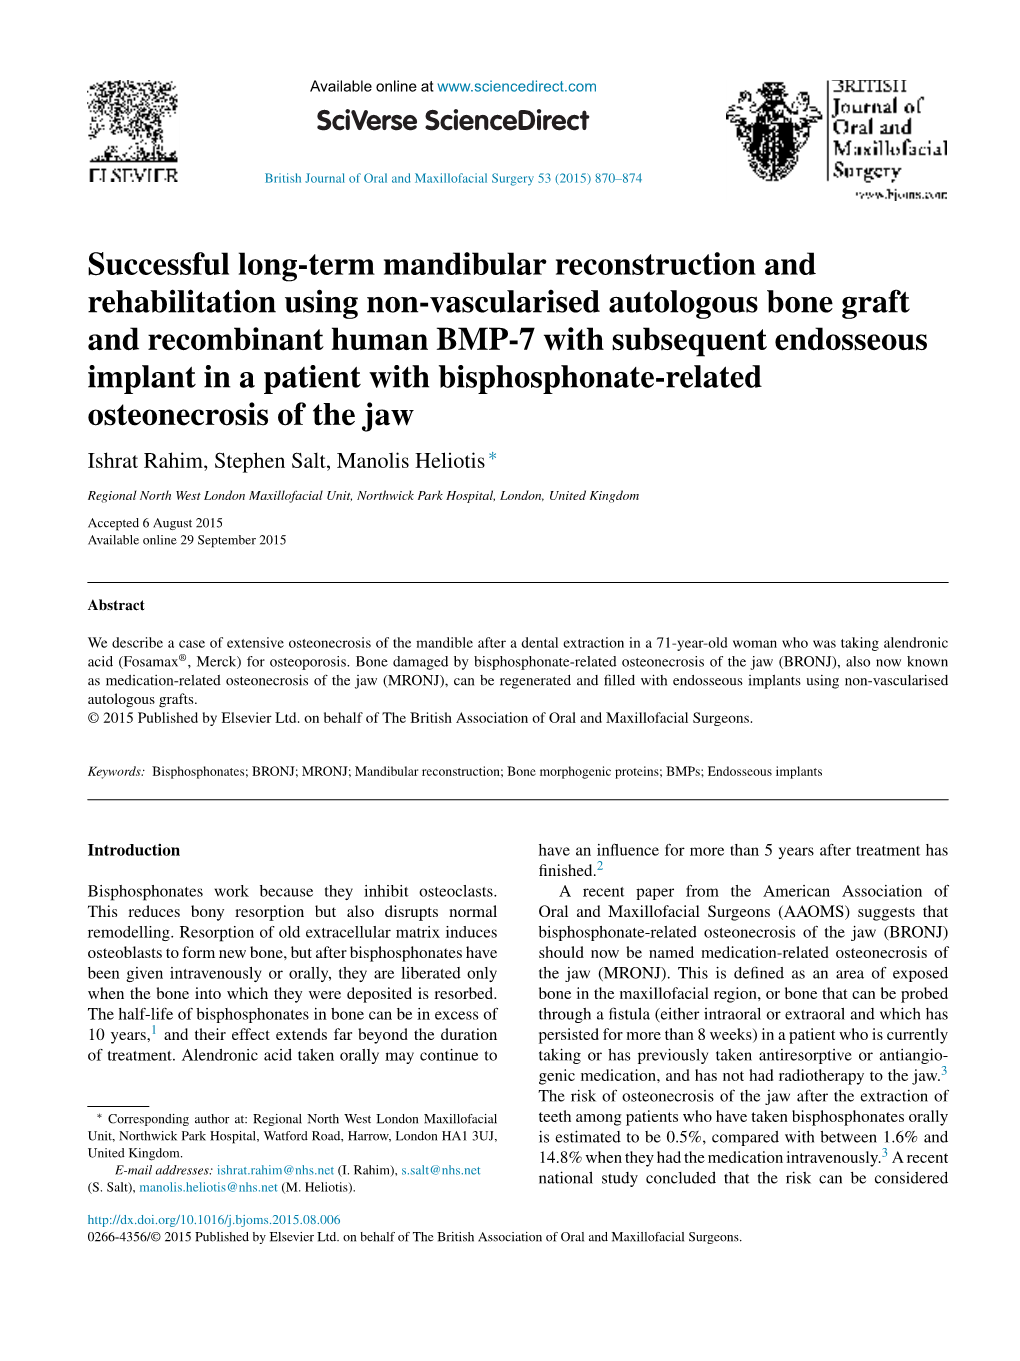 Successful Long-Term Mandibular Reconstruction and Rehabilitation Using Non-Vascularised Autologous Bone Graft and Recombinant H